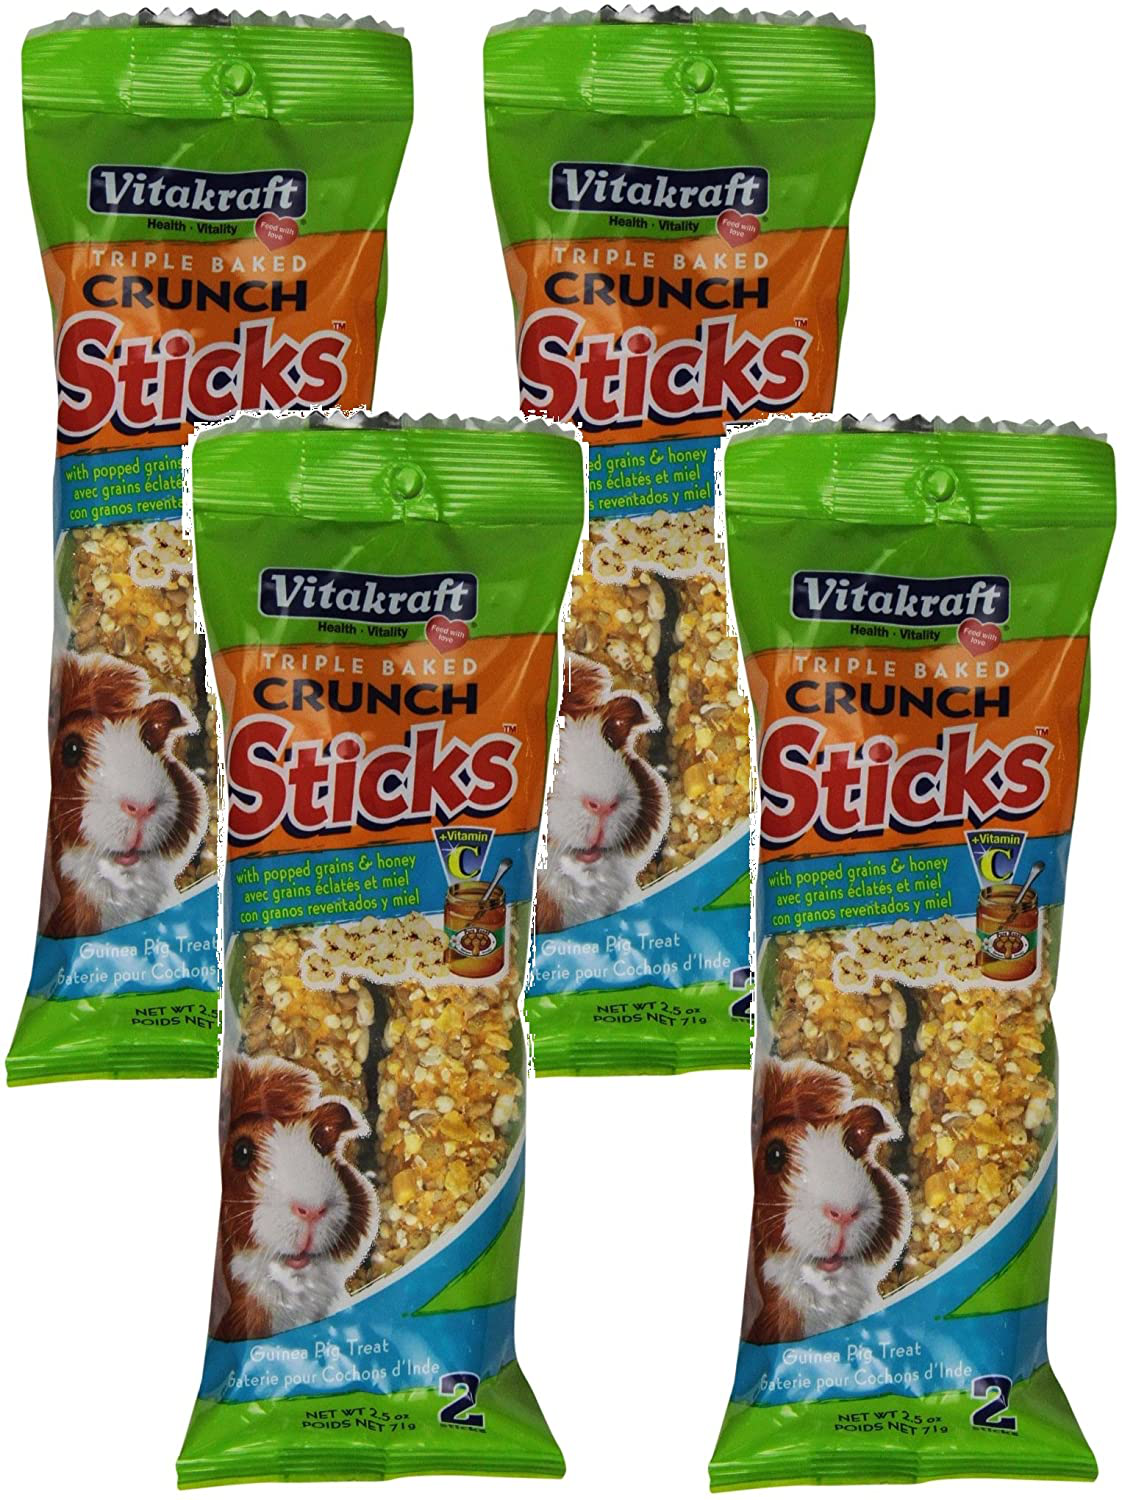 Vitakraft Triple Baked Crunch Sticks with Popped Grains and Honey, 2.5 Ounces Each, Guinea Pig Treat